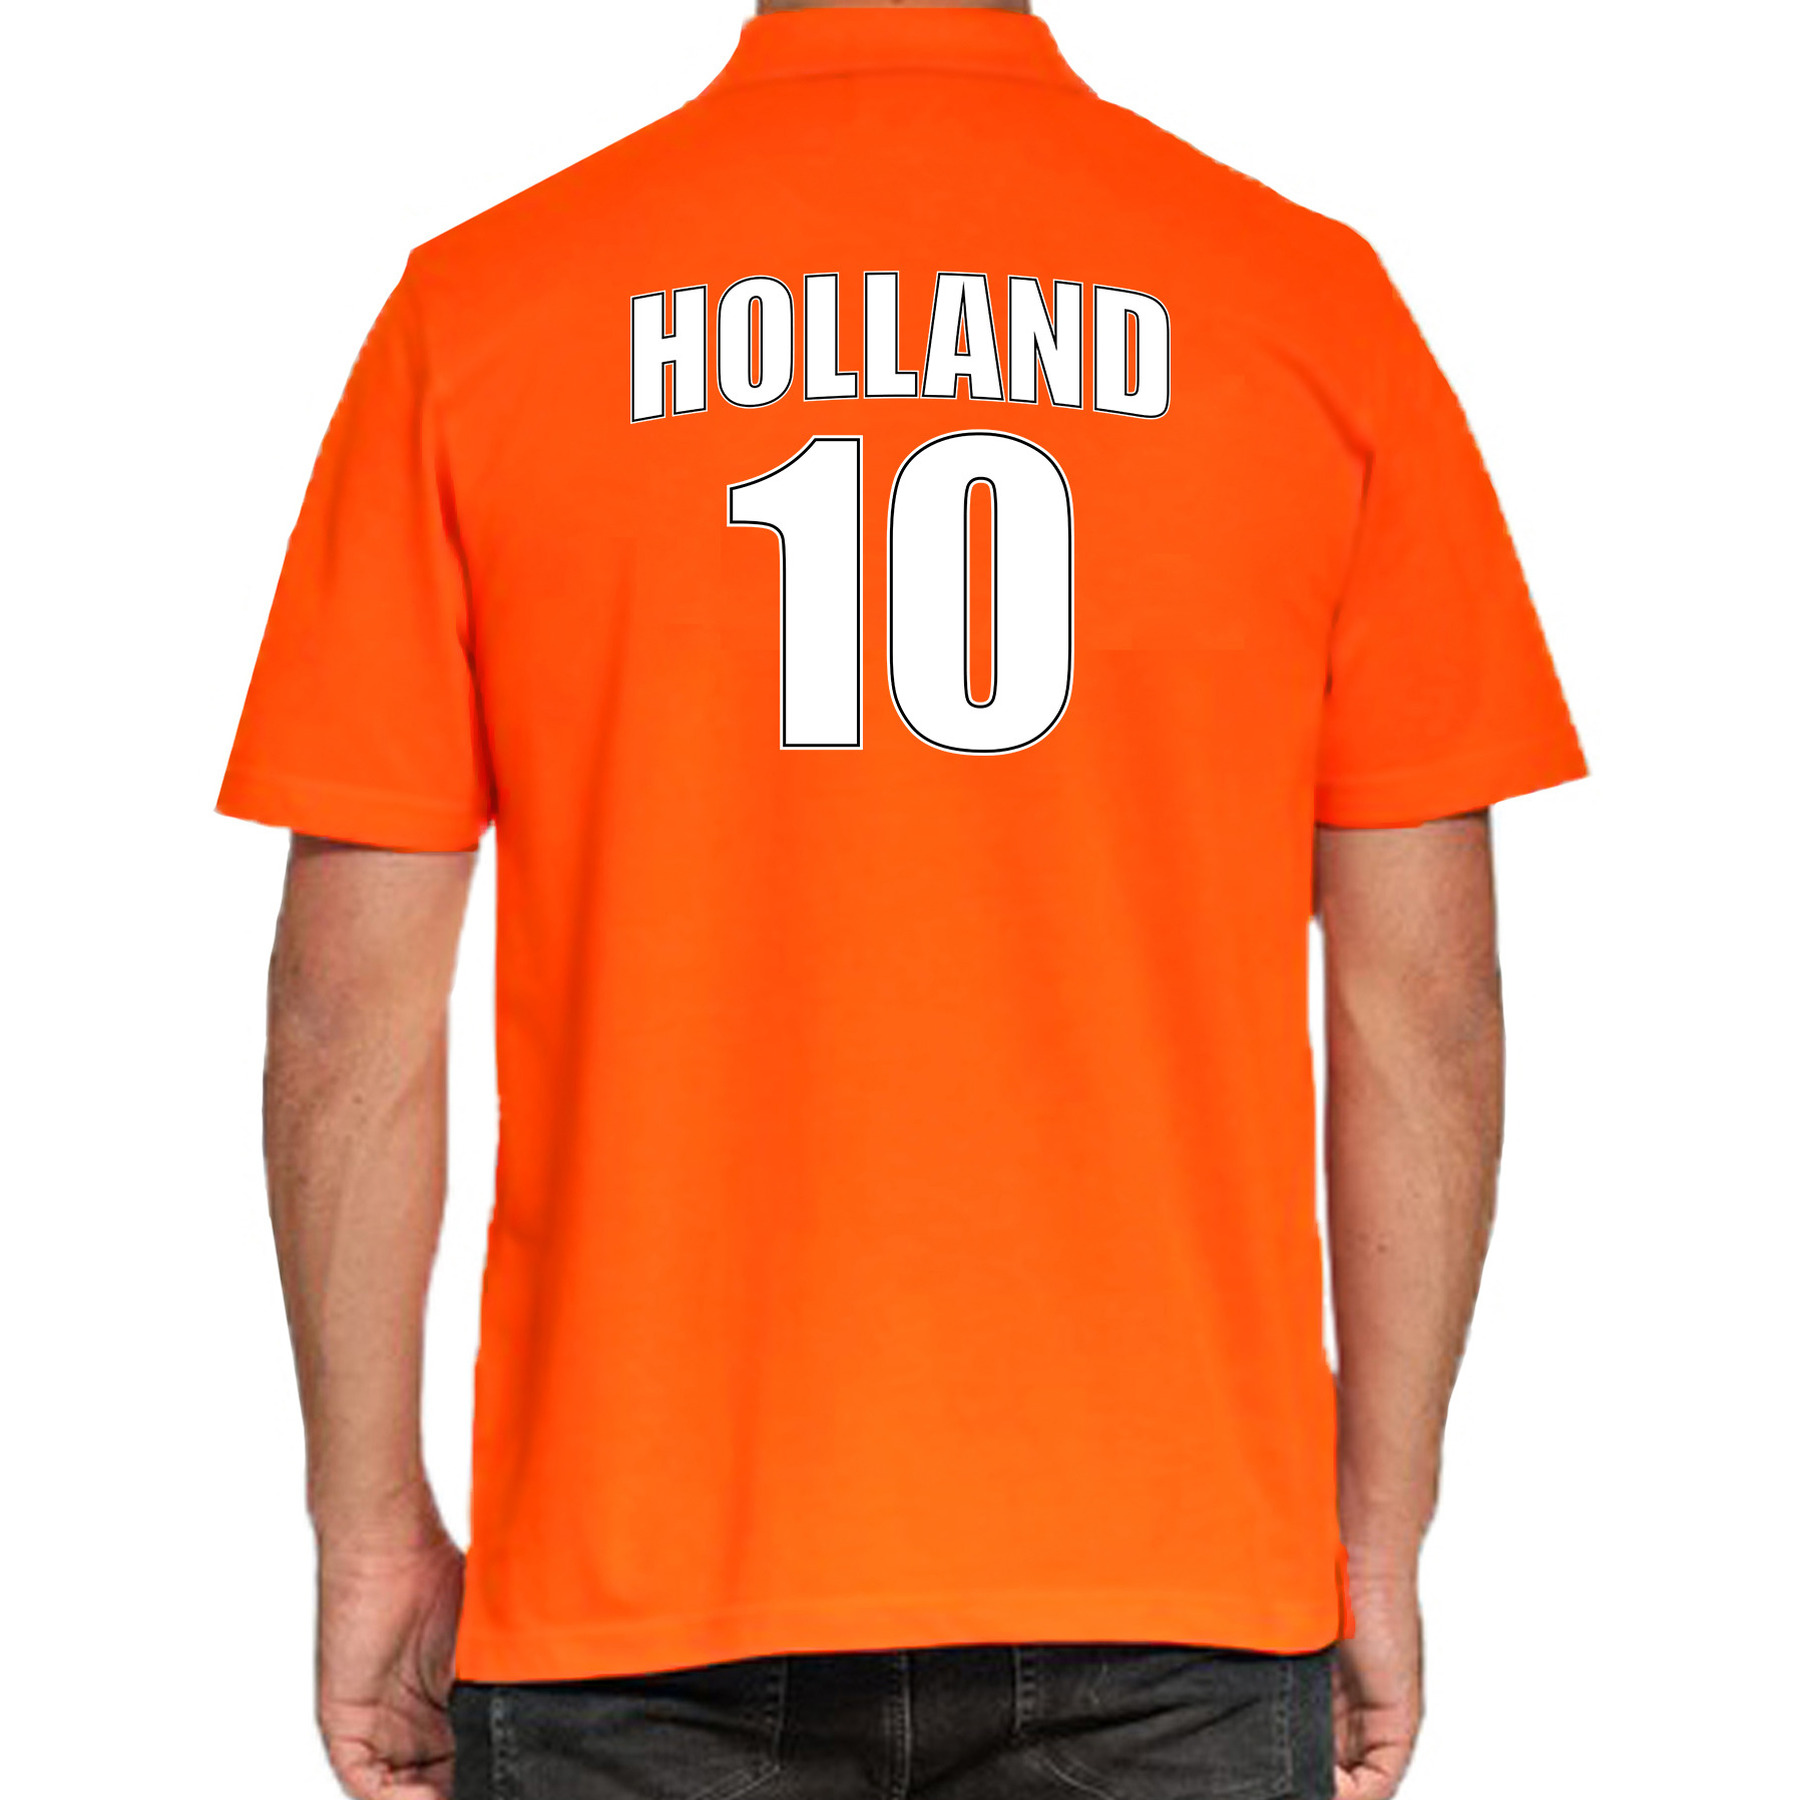 Oranje supporter poloshirt met rugnummer 10 - Holland - Nederland fan shirt voor heren